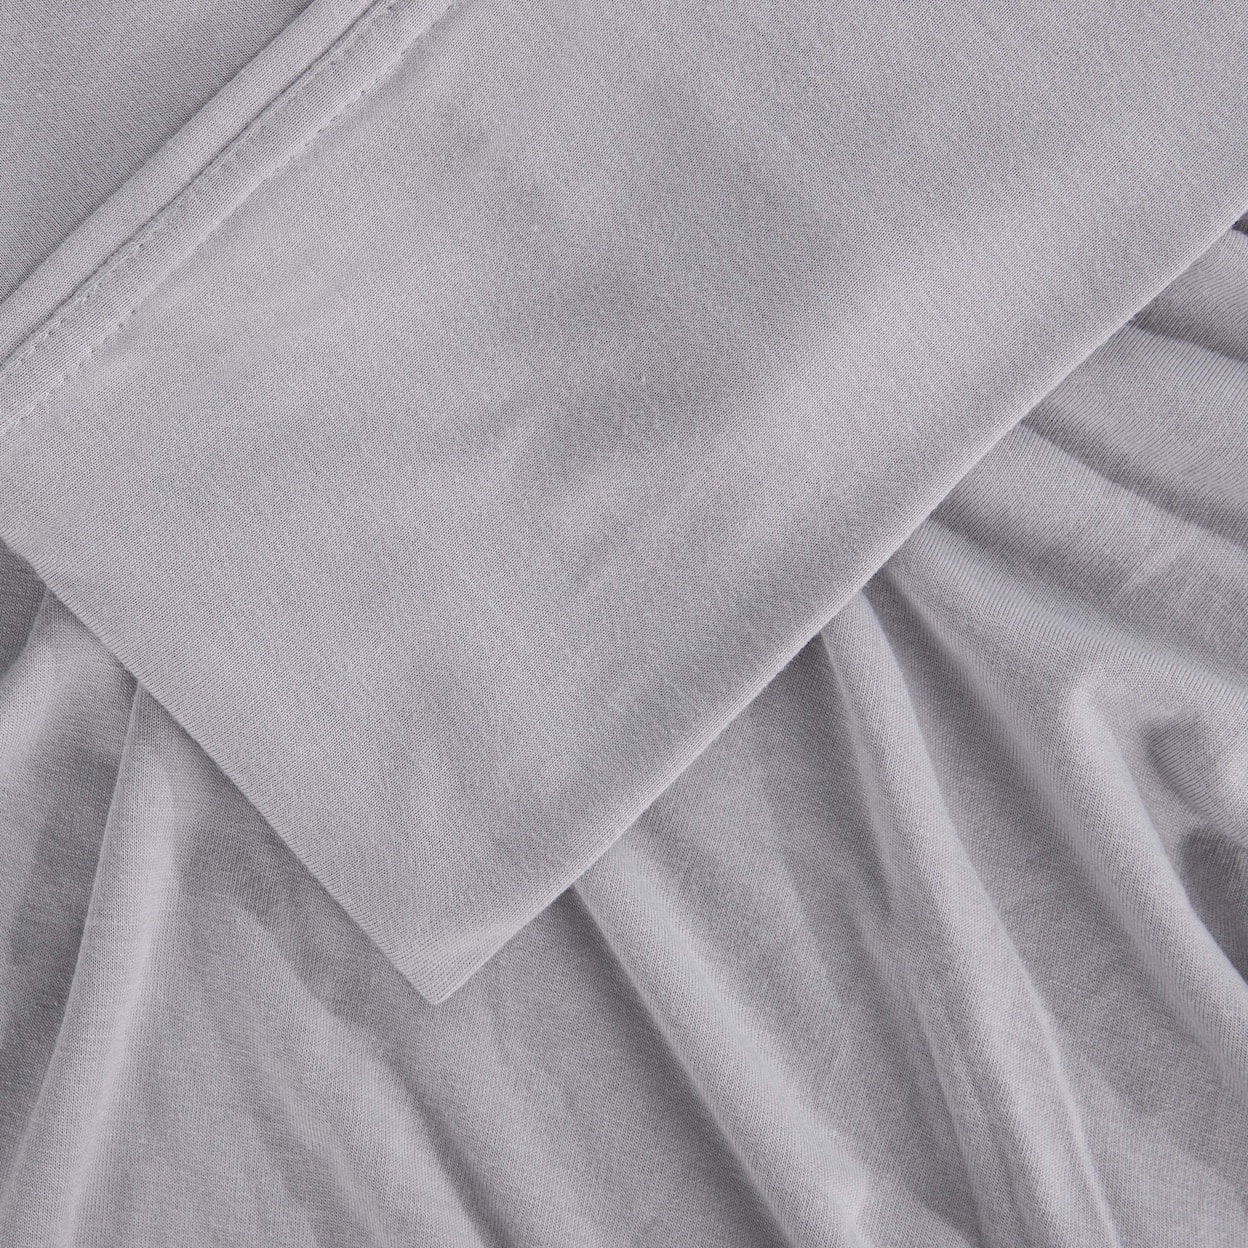 Bedgear Hyper-Wool Sheets Sheet Set,Grey, King/Cal King